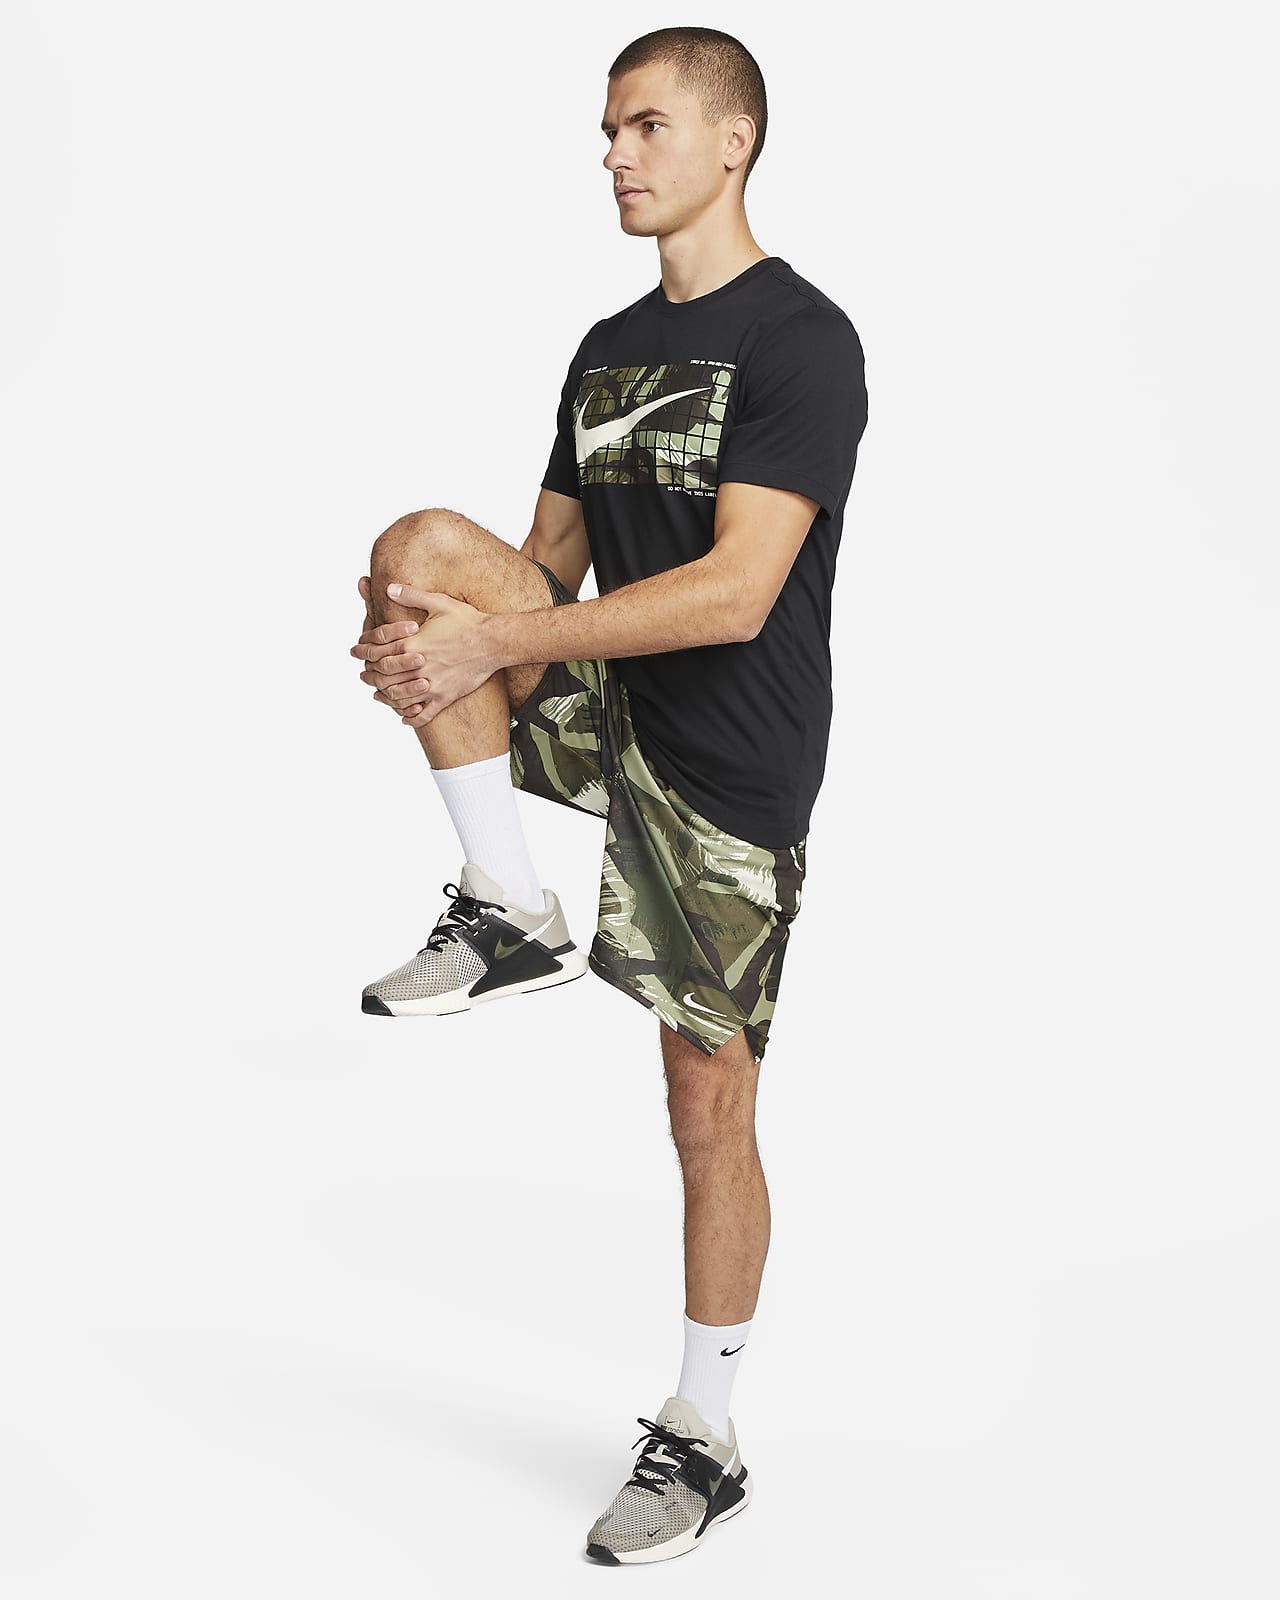 Men's Nike Dri-FIT Camo Training Tee